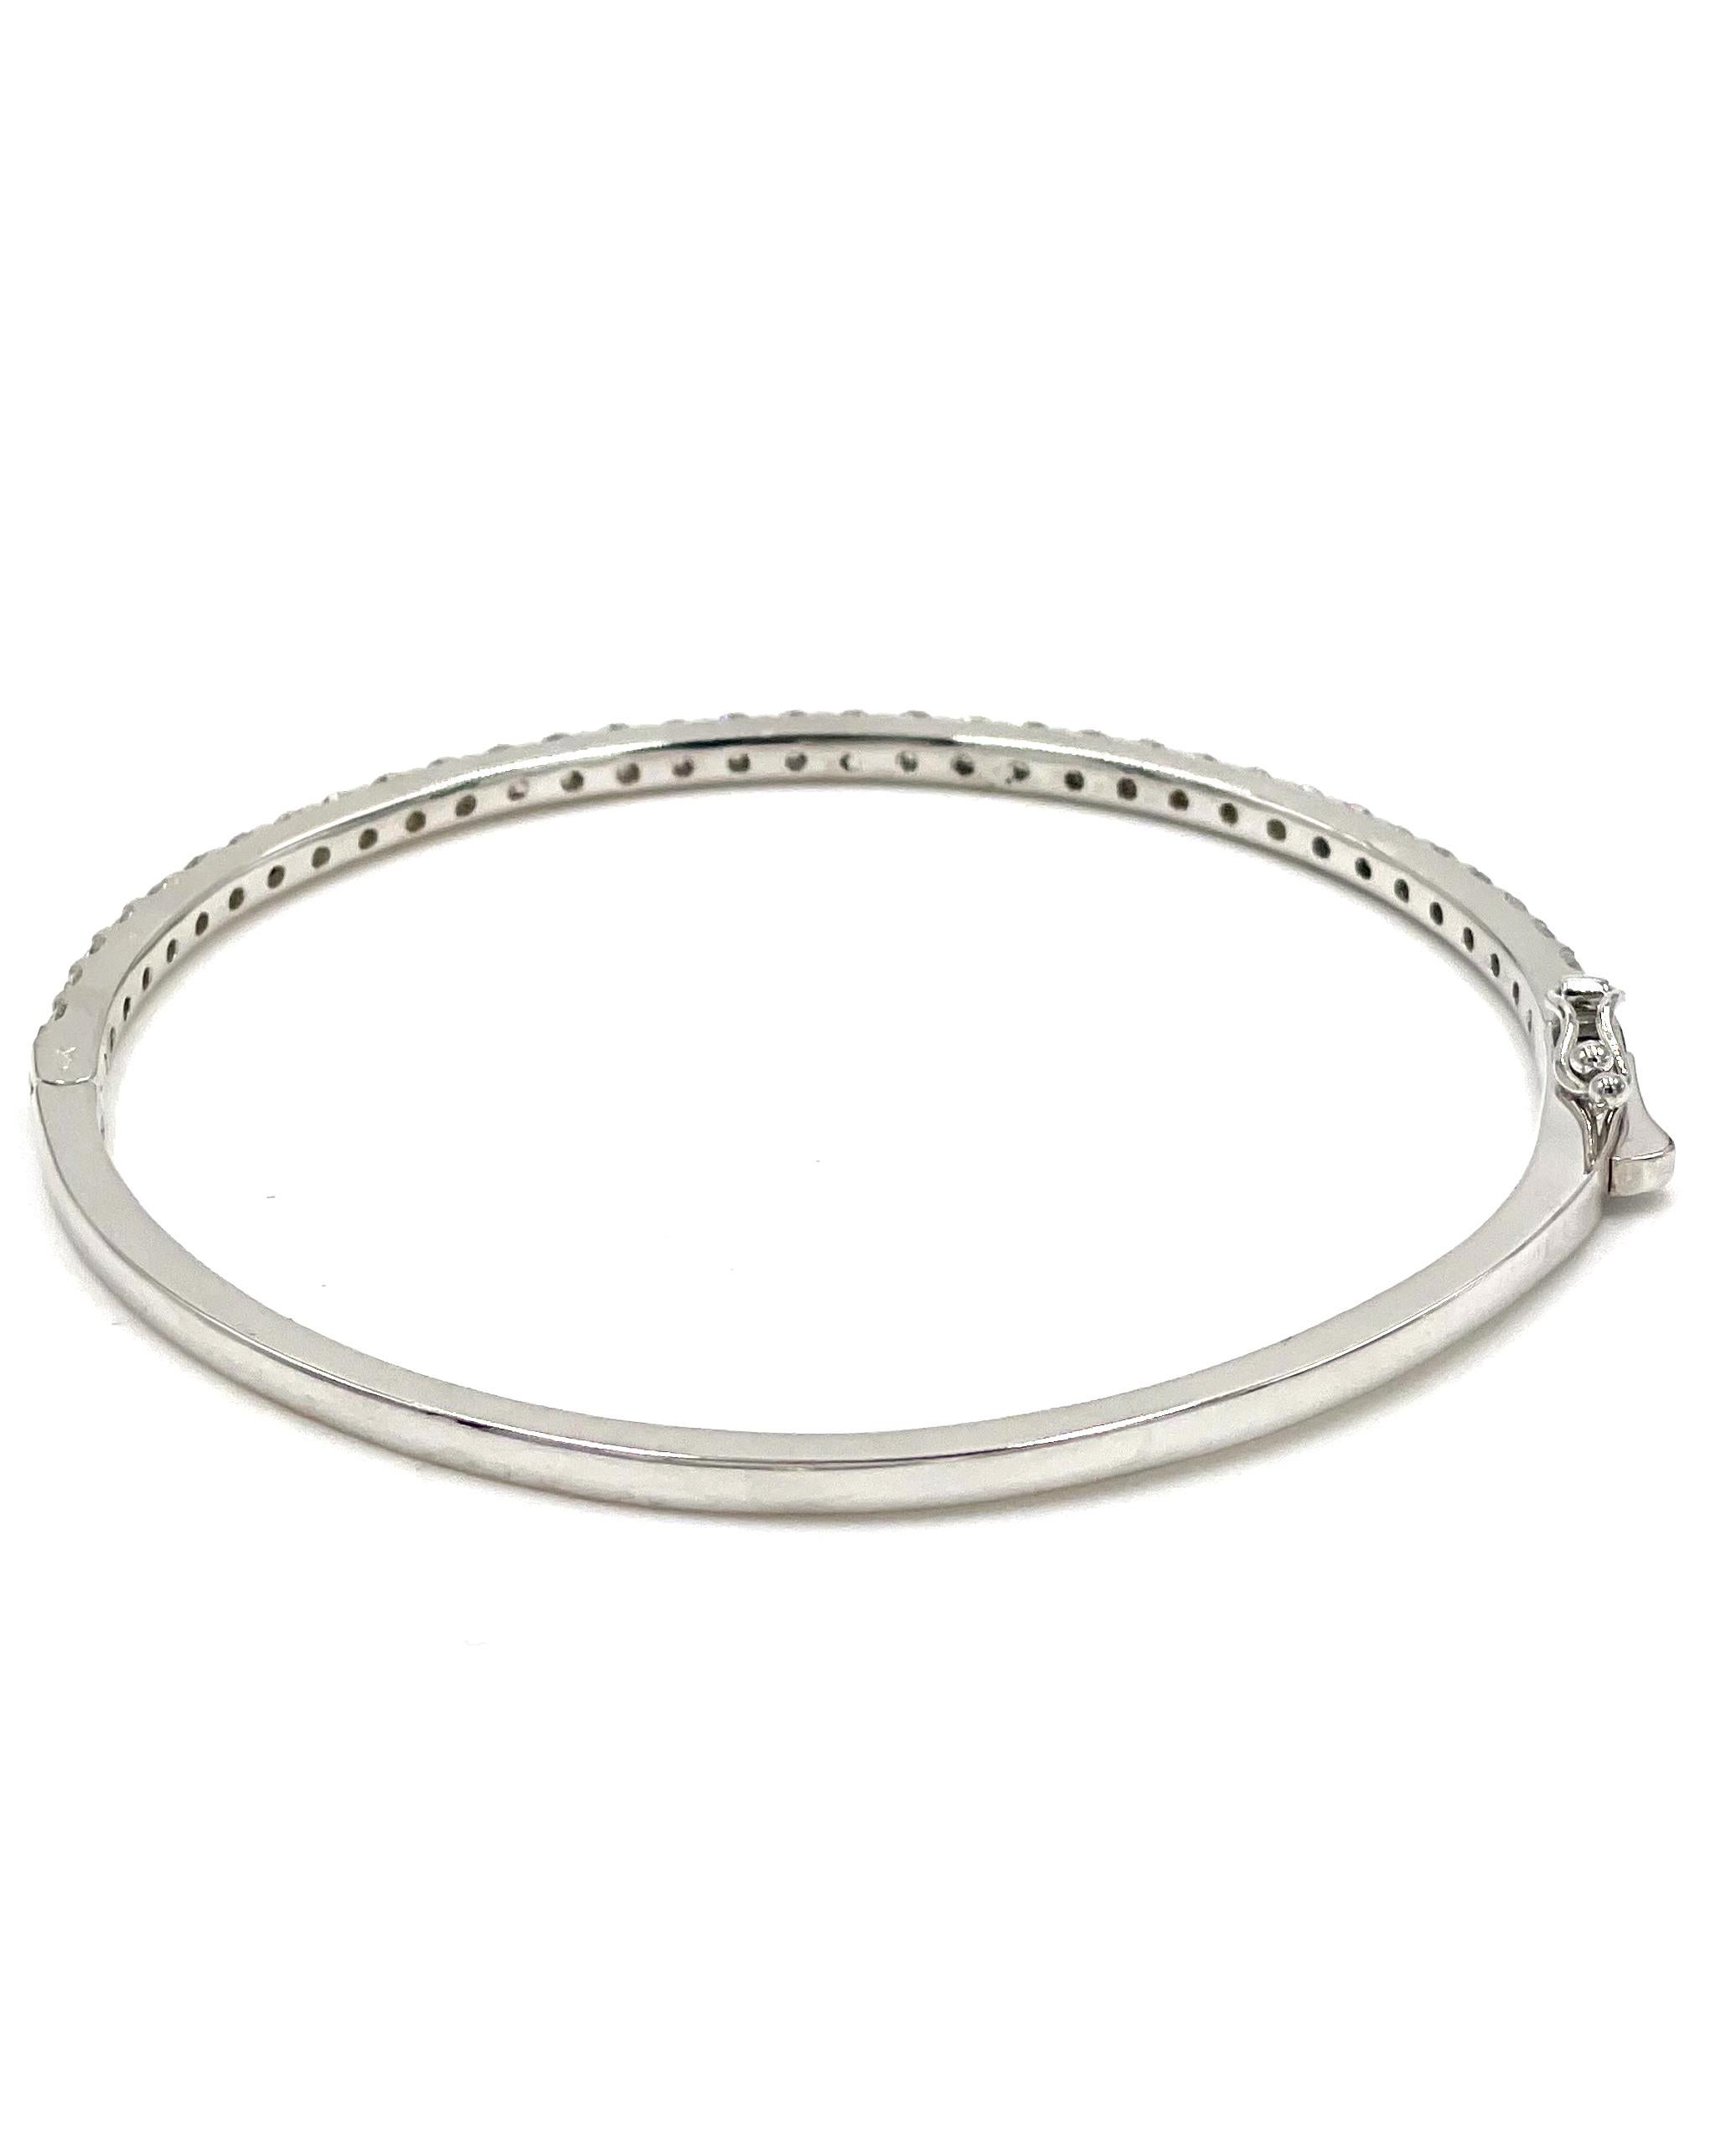 Women's 14K White Gold Diamond Bangle Bracelet - 1.75 Carats For Sale